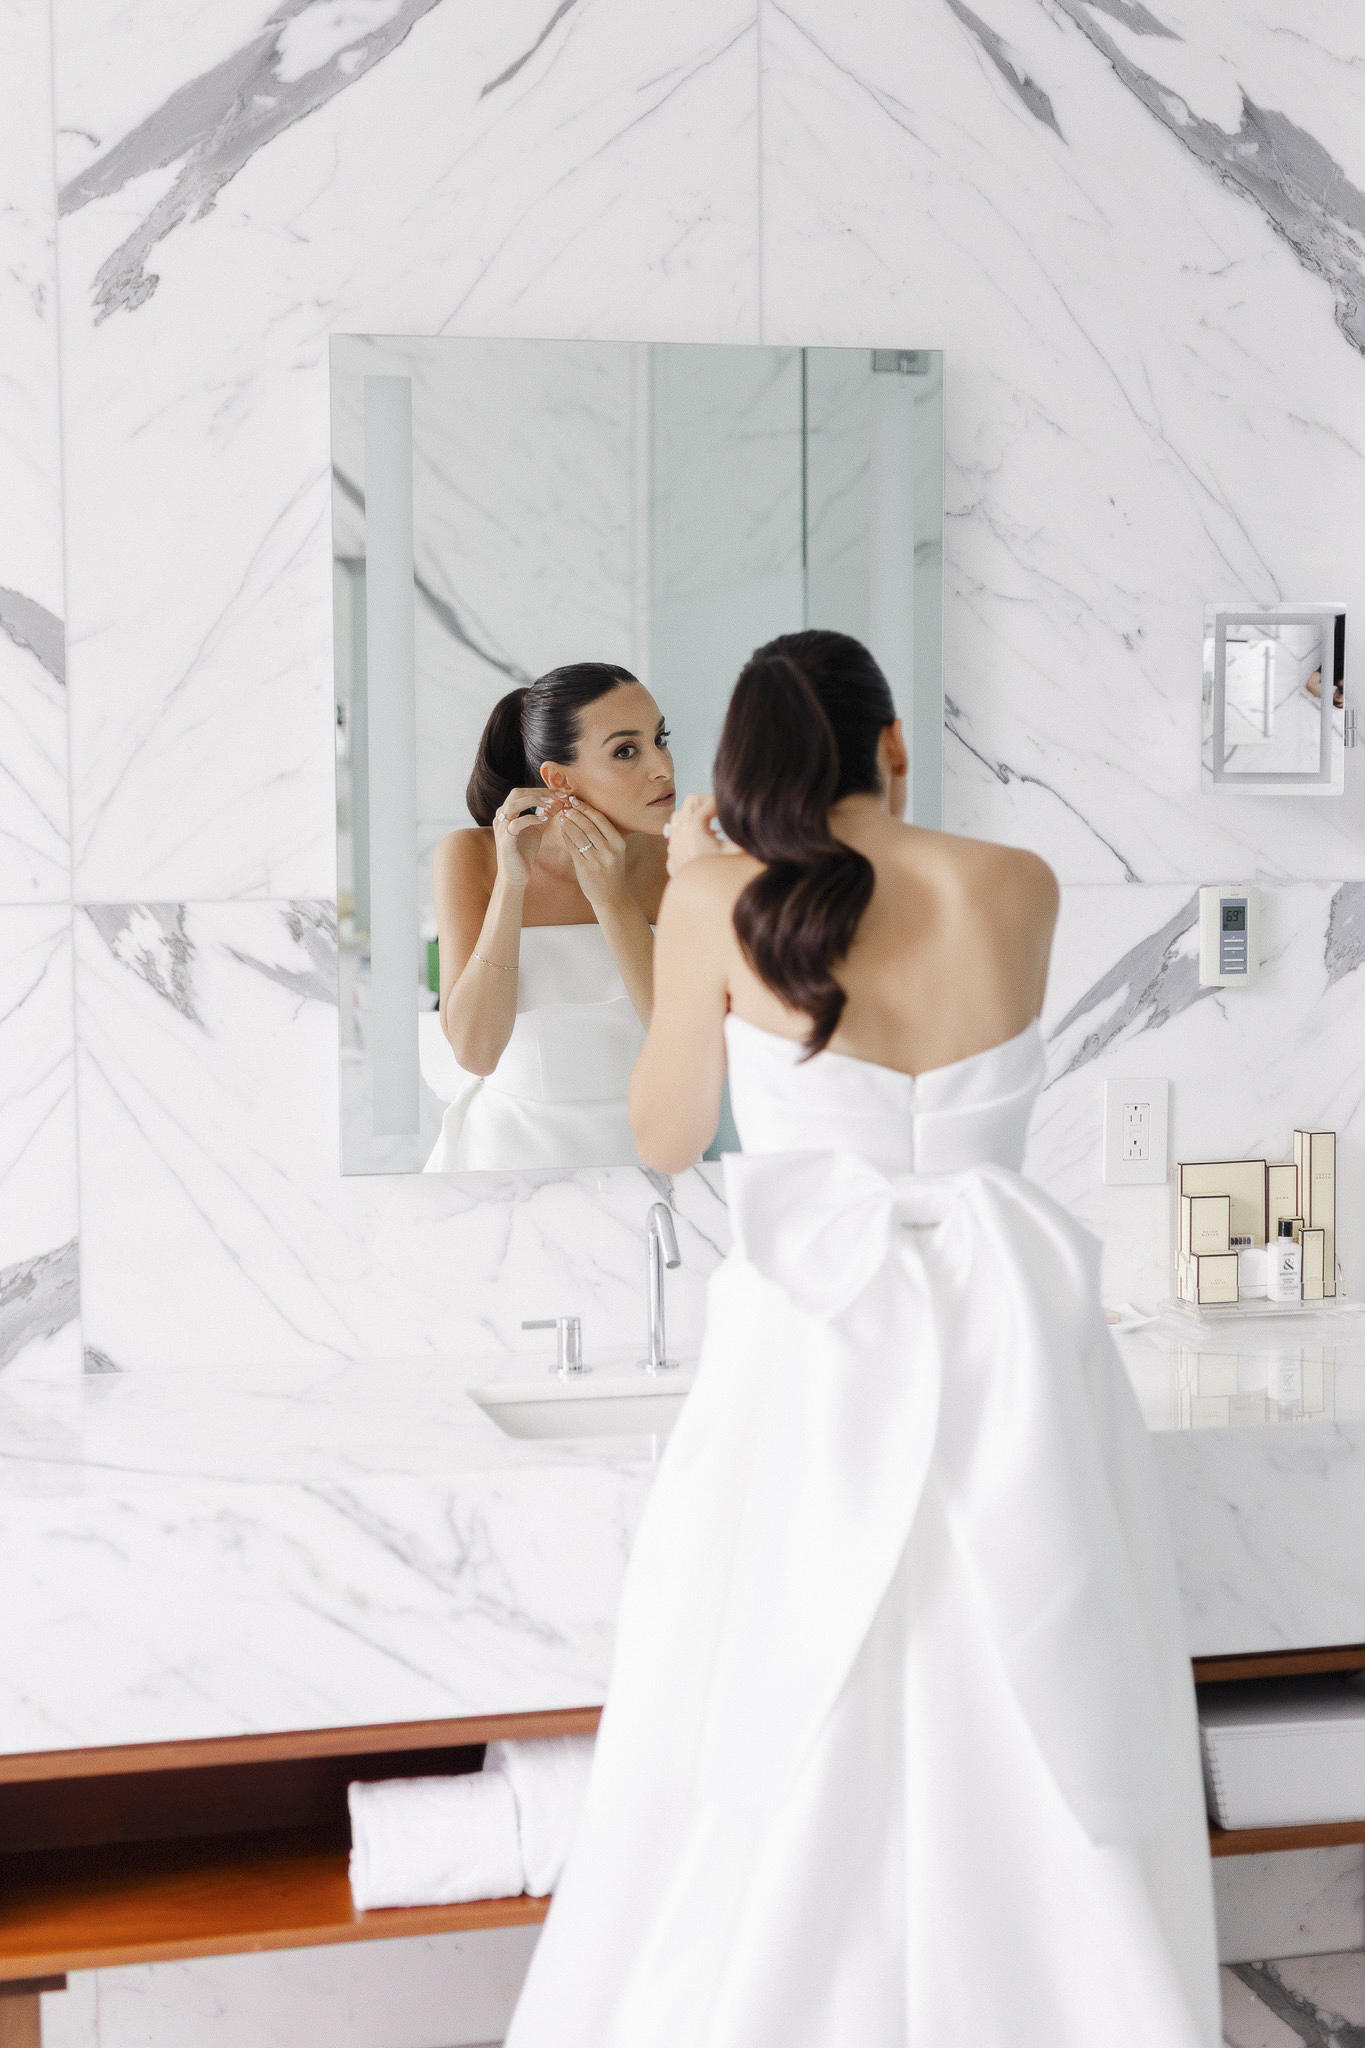 Bride putting on earrings in a bathroom mirror.